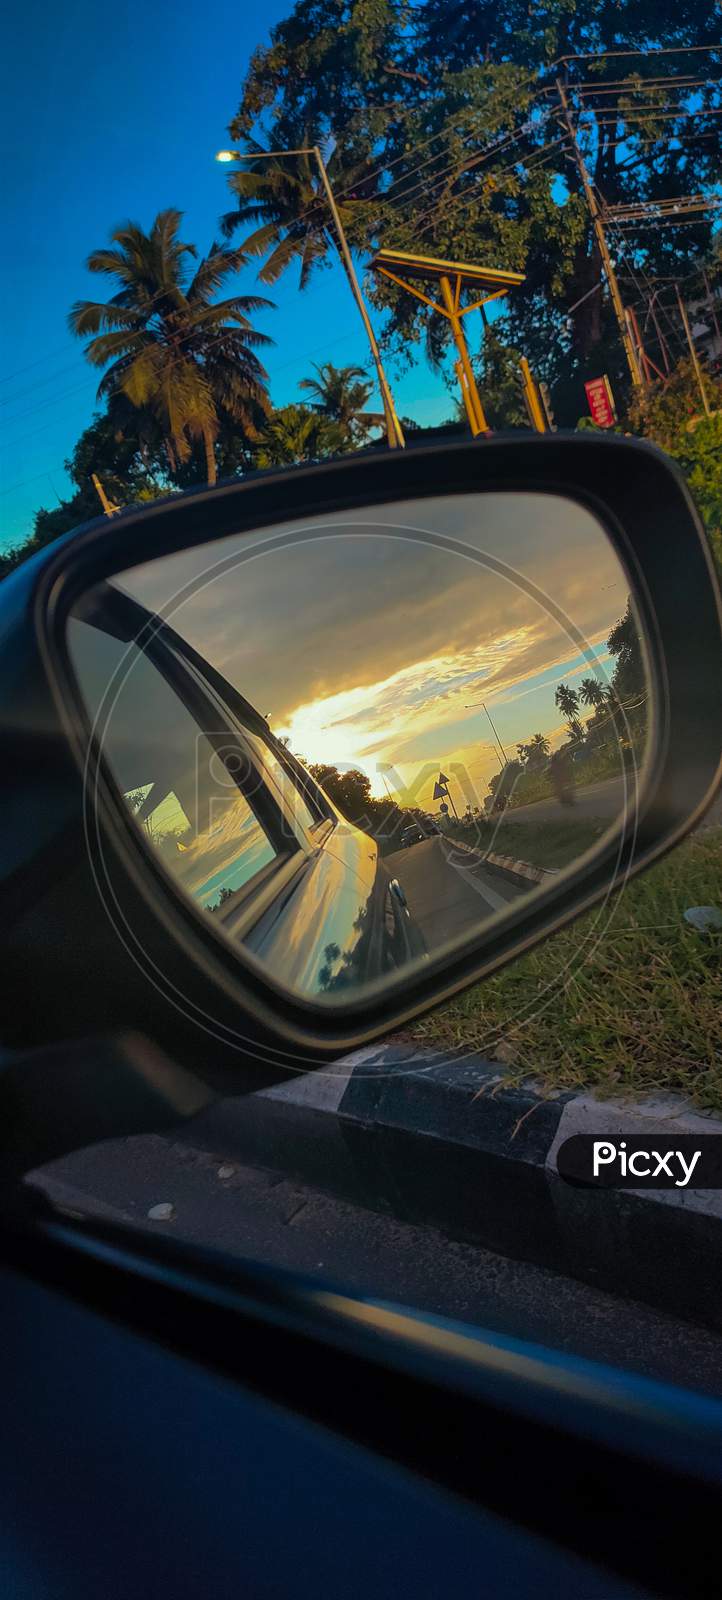 Sunset refection on mirror